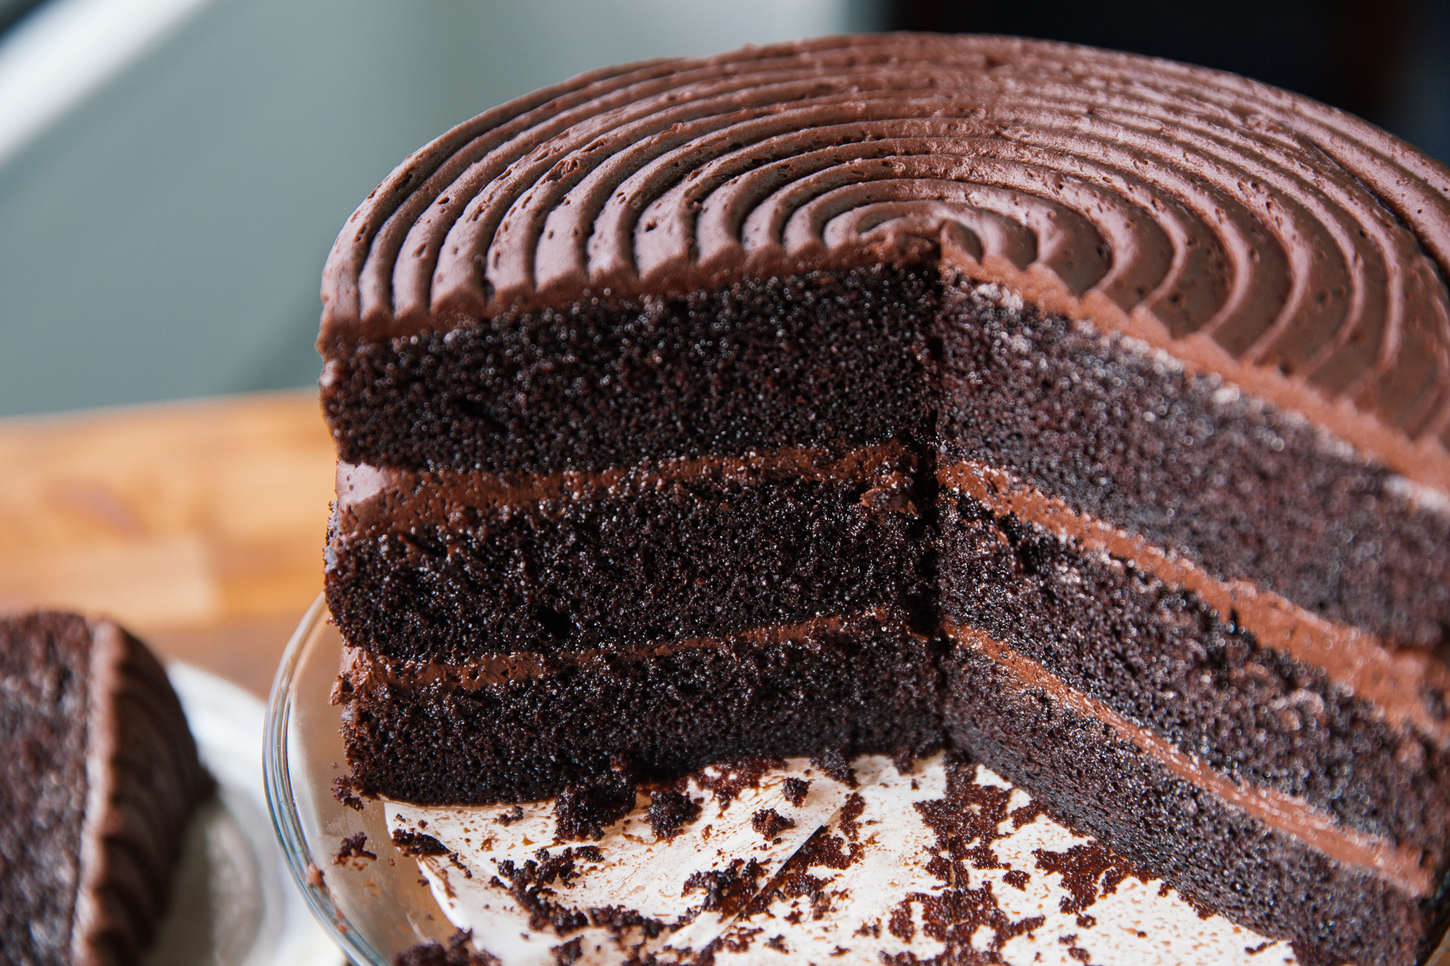 Chocolate cake for breakfast? It's true!